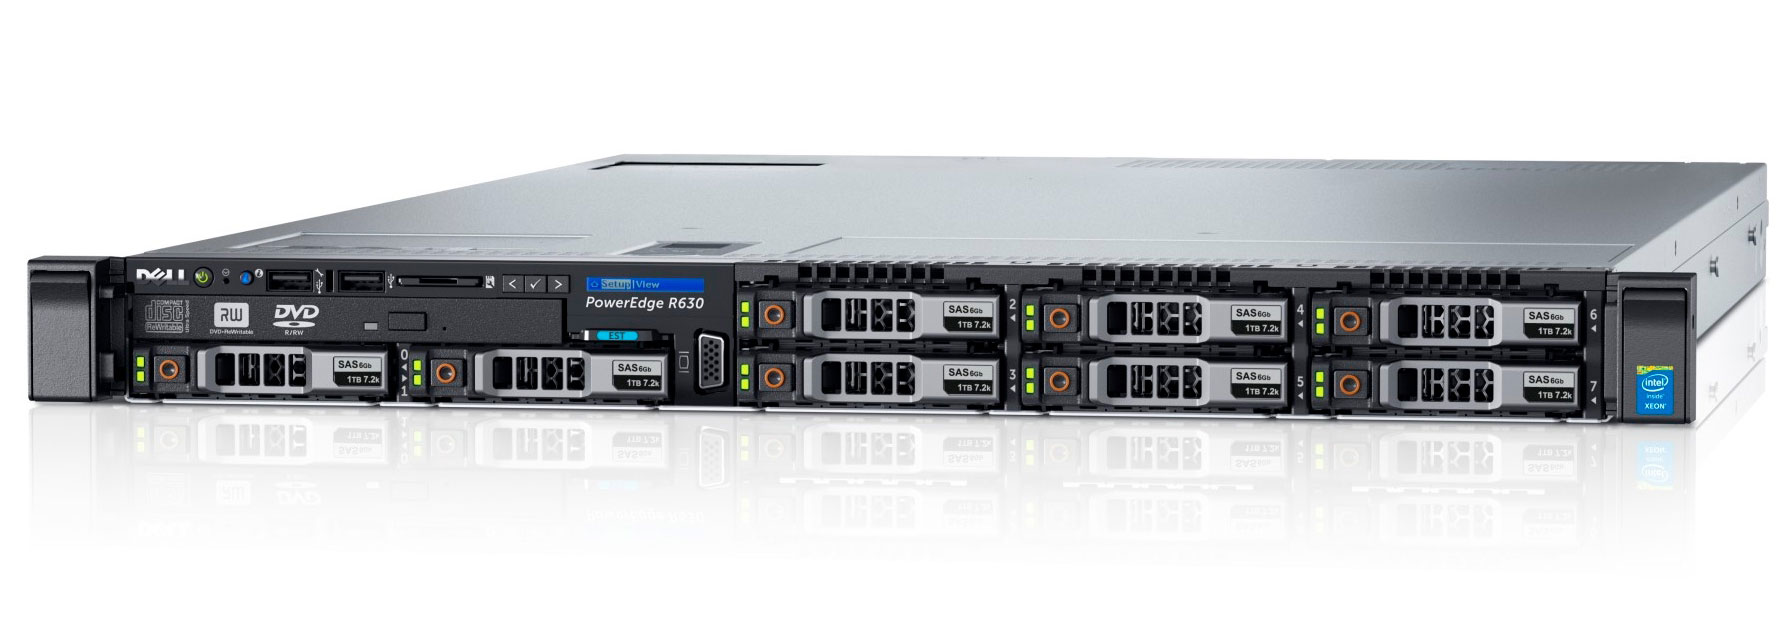 Подробное фото Сервер DELL PowerEdge R630 Xeon 2x E5-2667v4 192Gb DDR4 2133P 8x noHDD 2.5", SAS RAID Perc H730, 1024Mb, DVD, 2*PSU